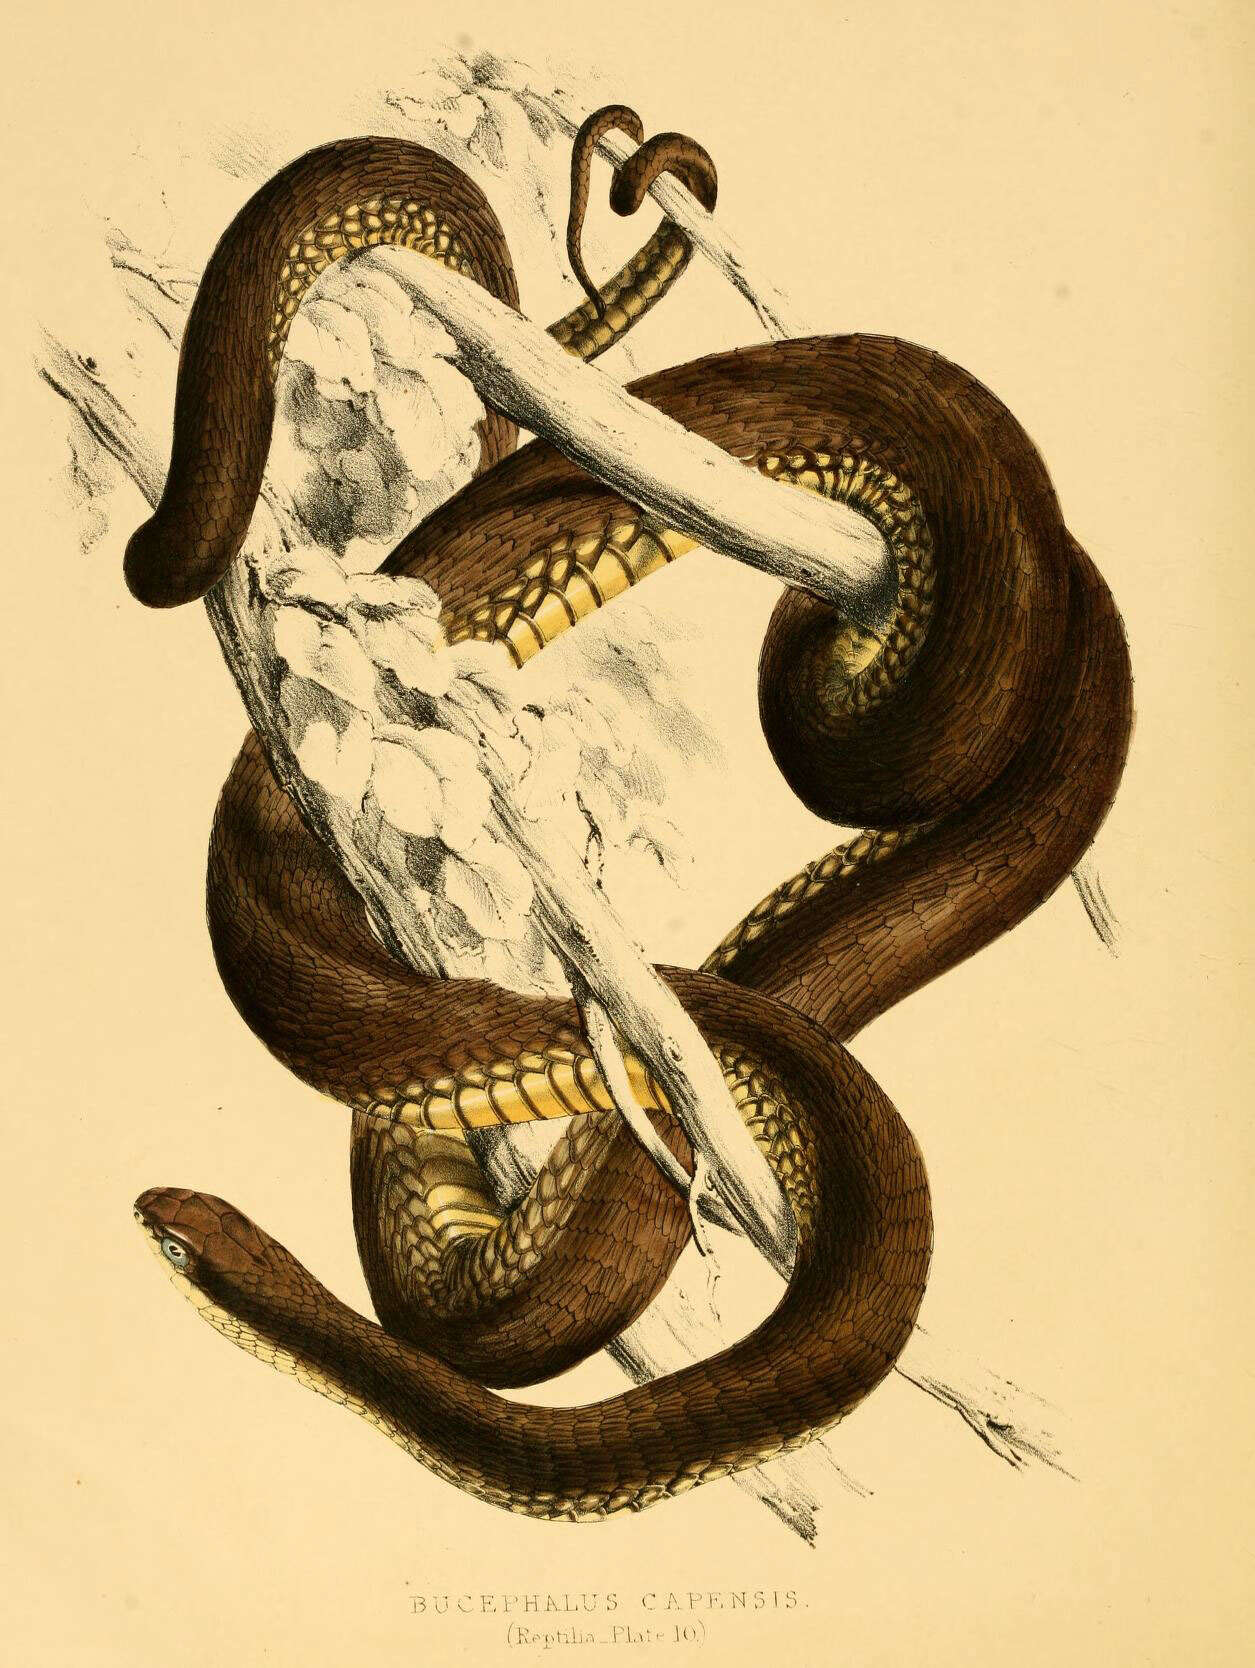 Image of Dispholidus Duvernoy 1832